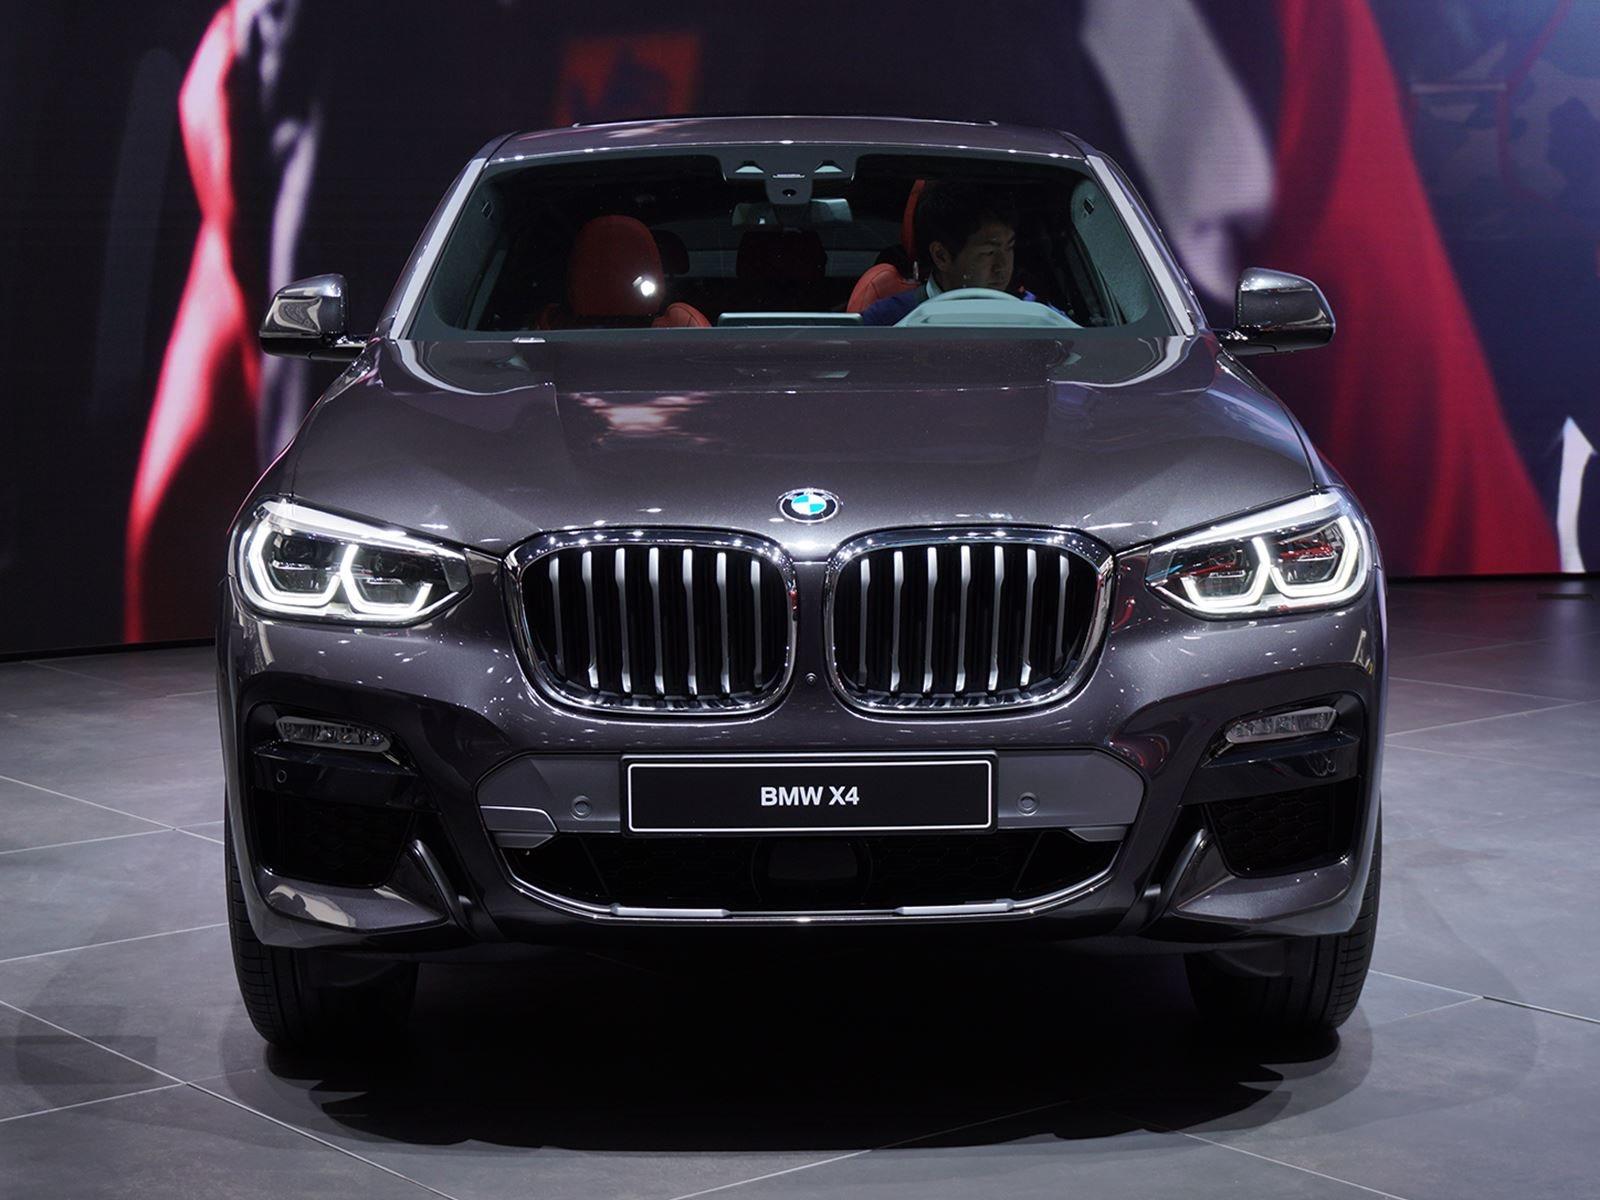 Stylish 2019 BMW X4 SUV Takes A Bow At Geneva